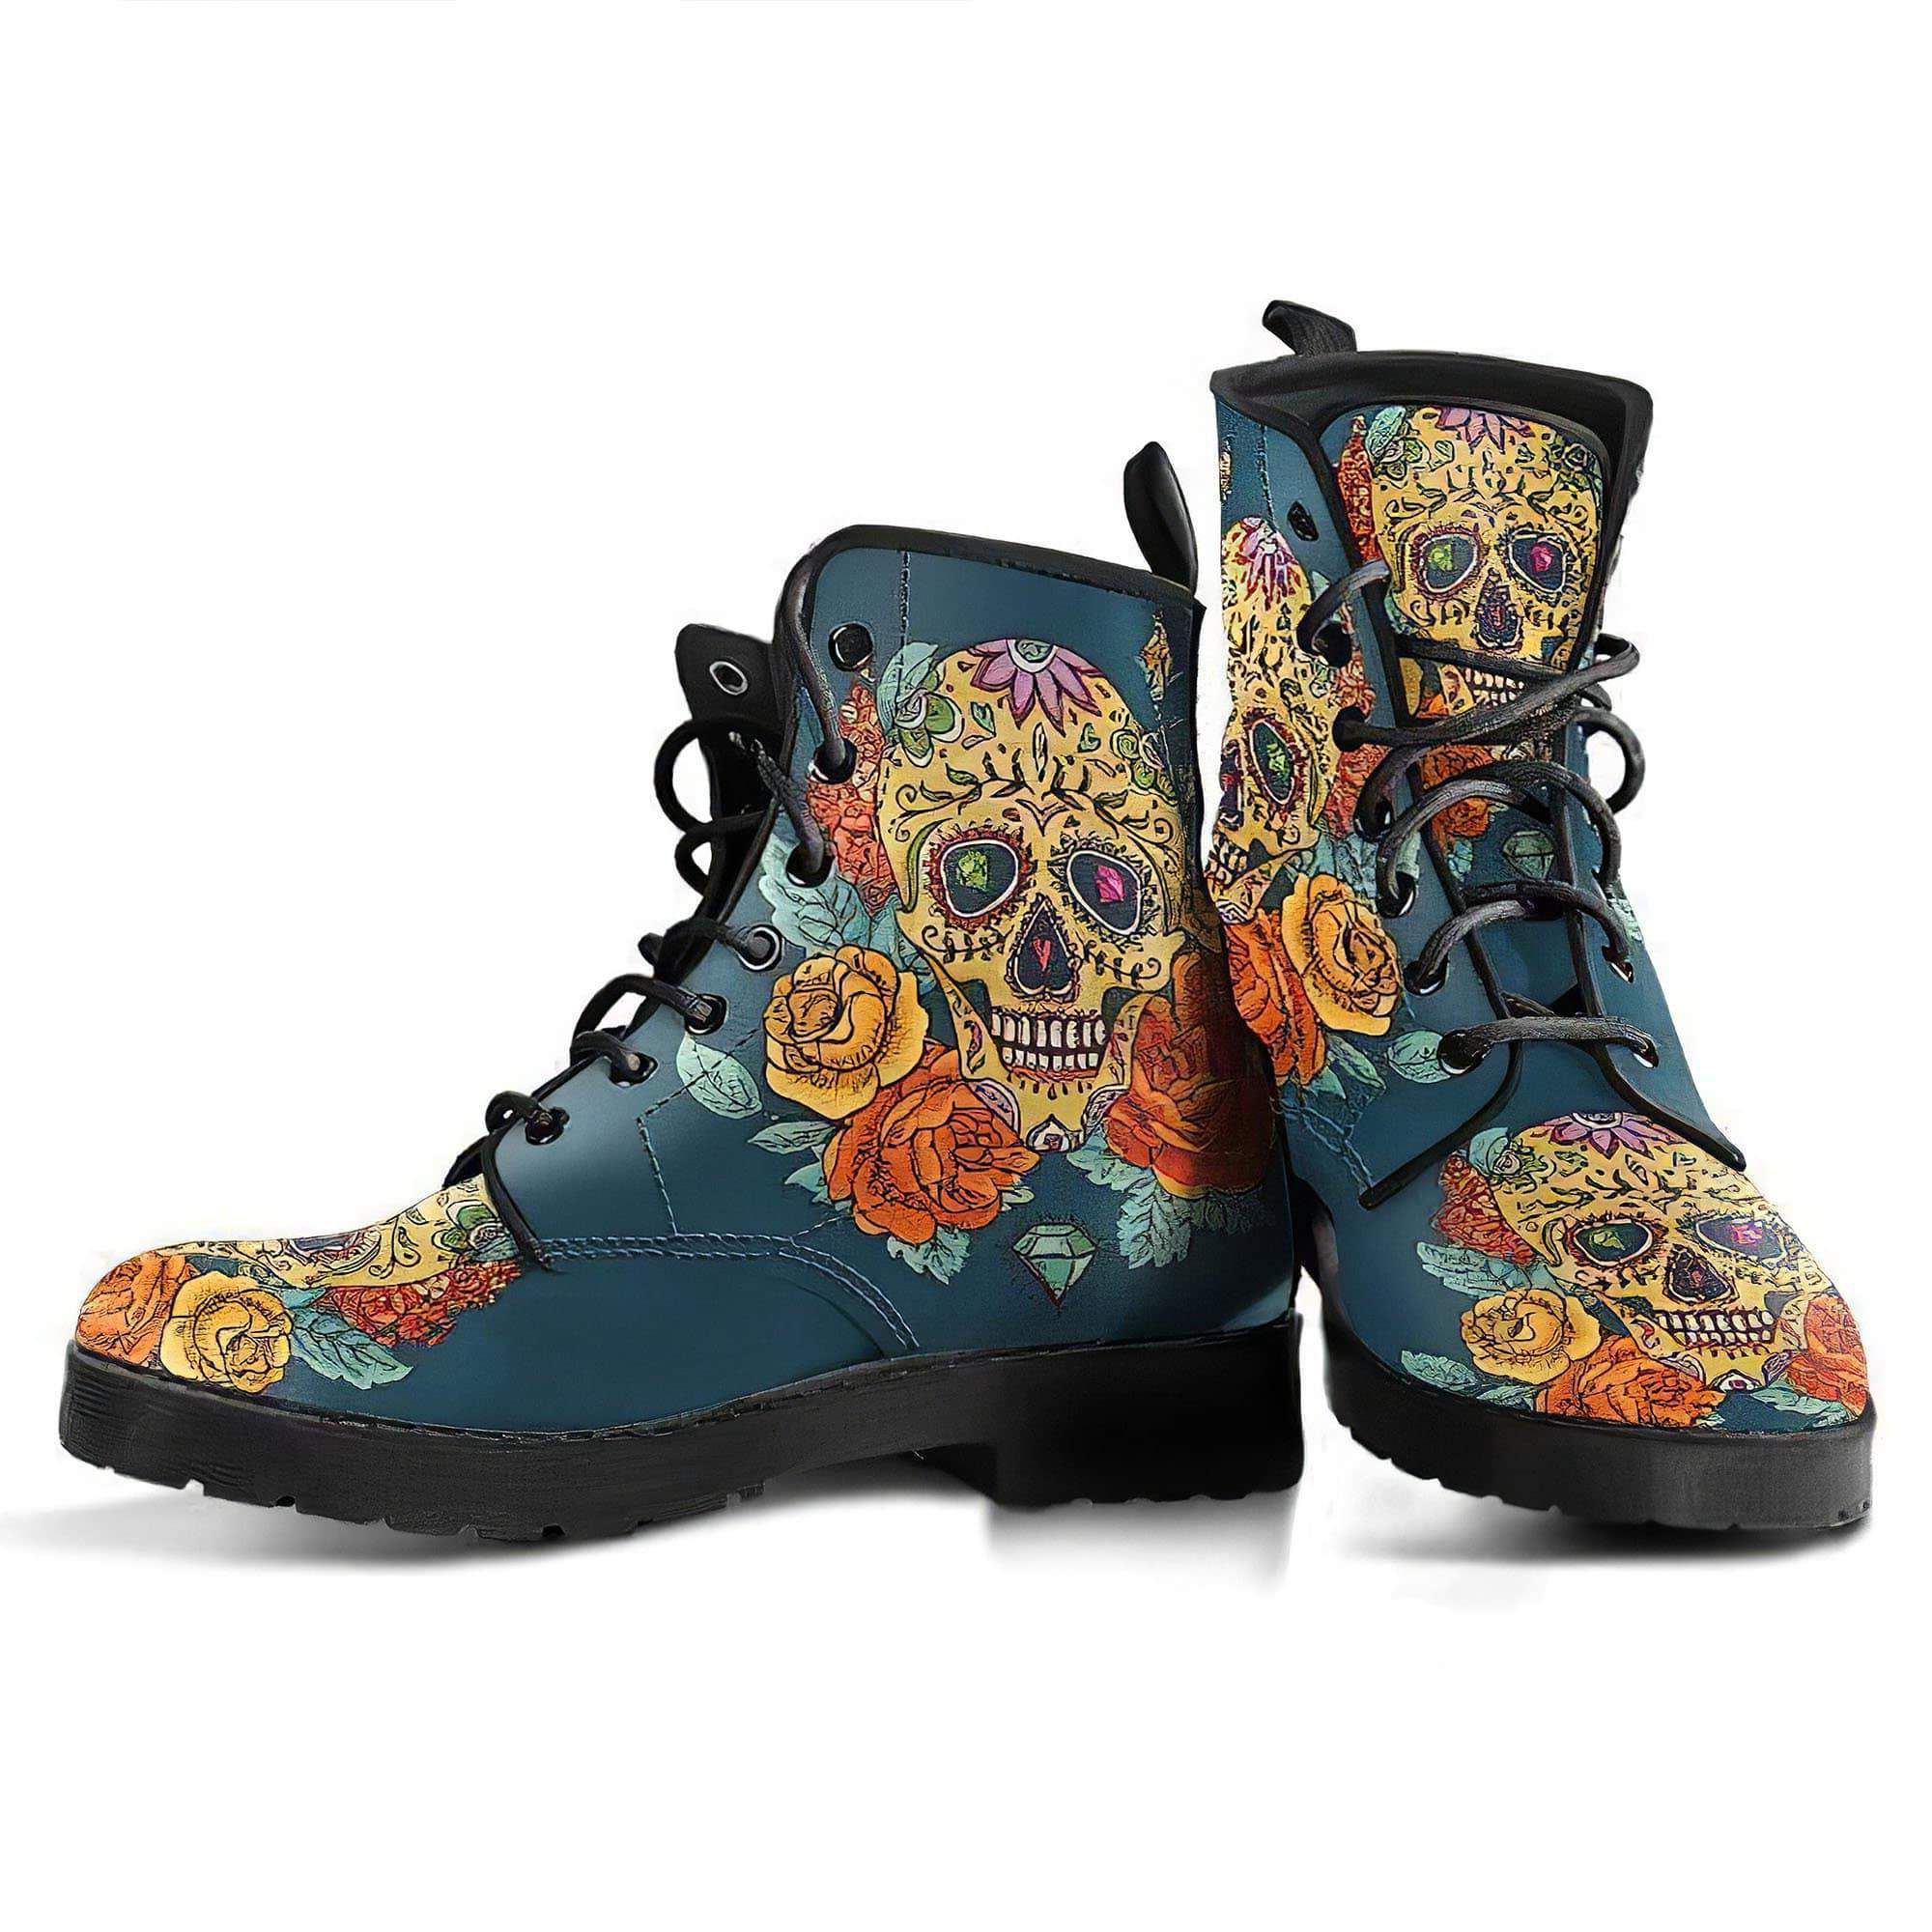 sugar-skull-women-s-boots-vegan-friendly-leather-women-s-leather-boots-12051954958397.jpg